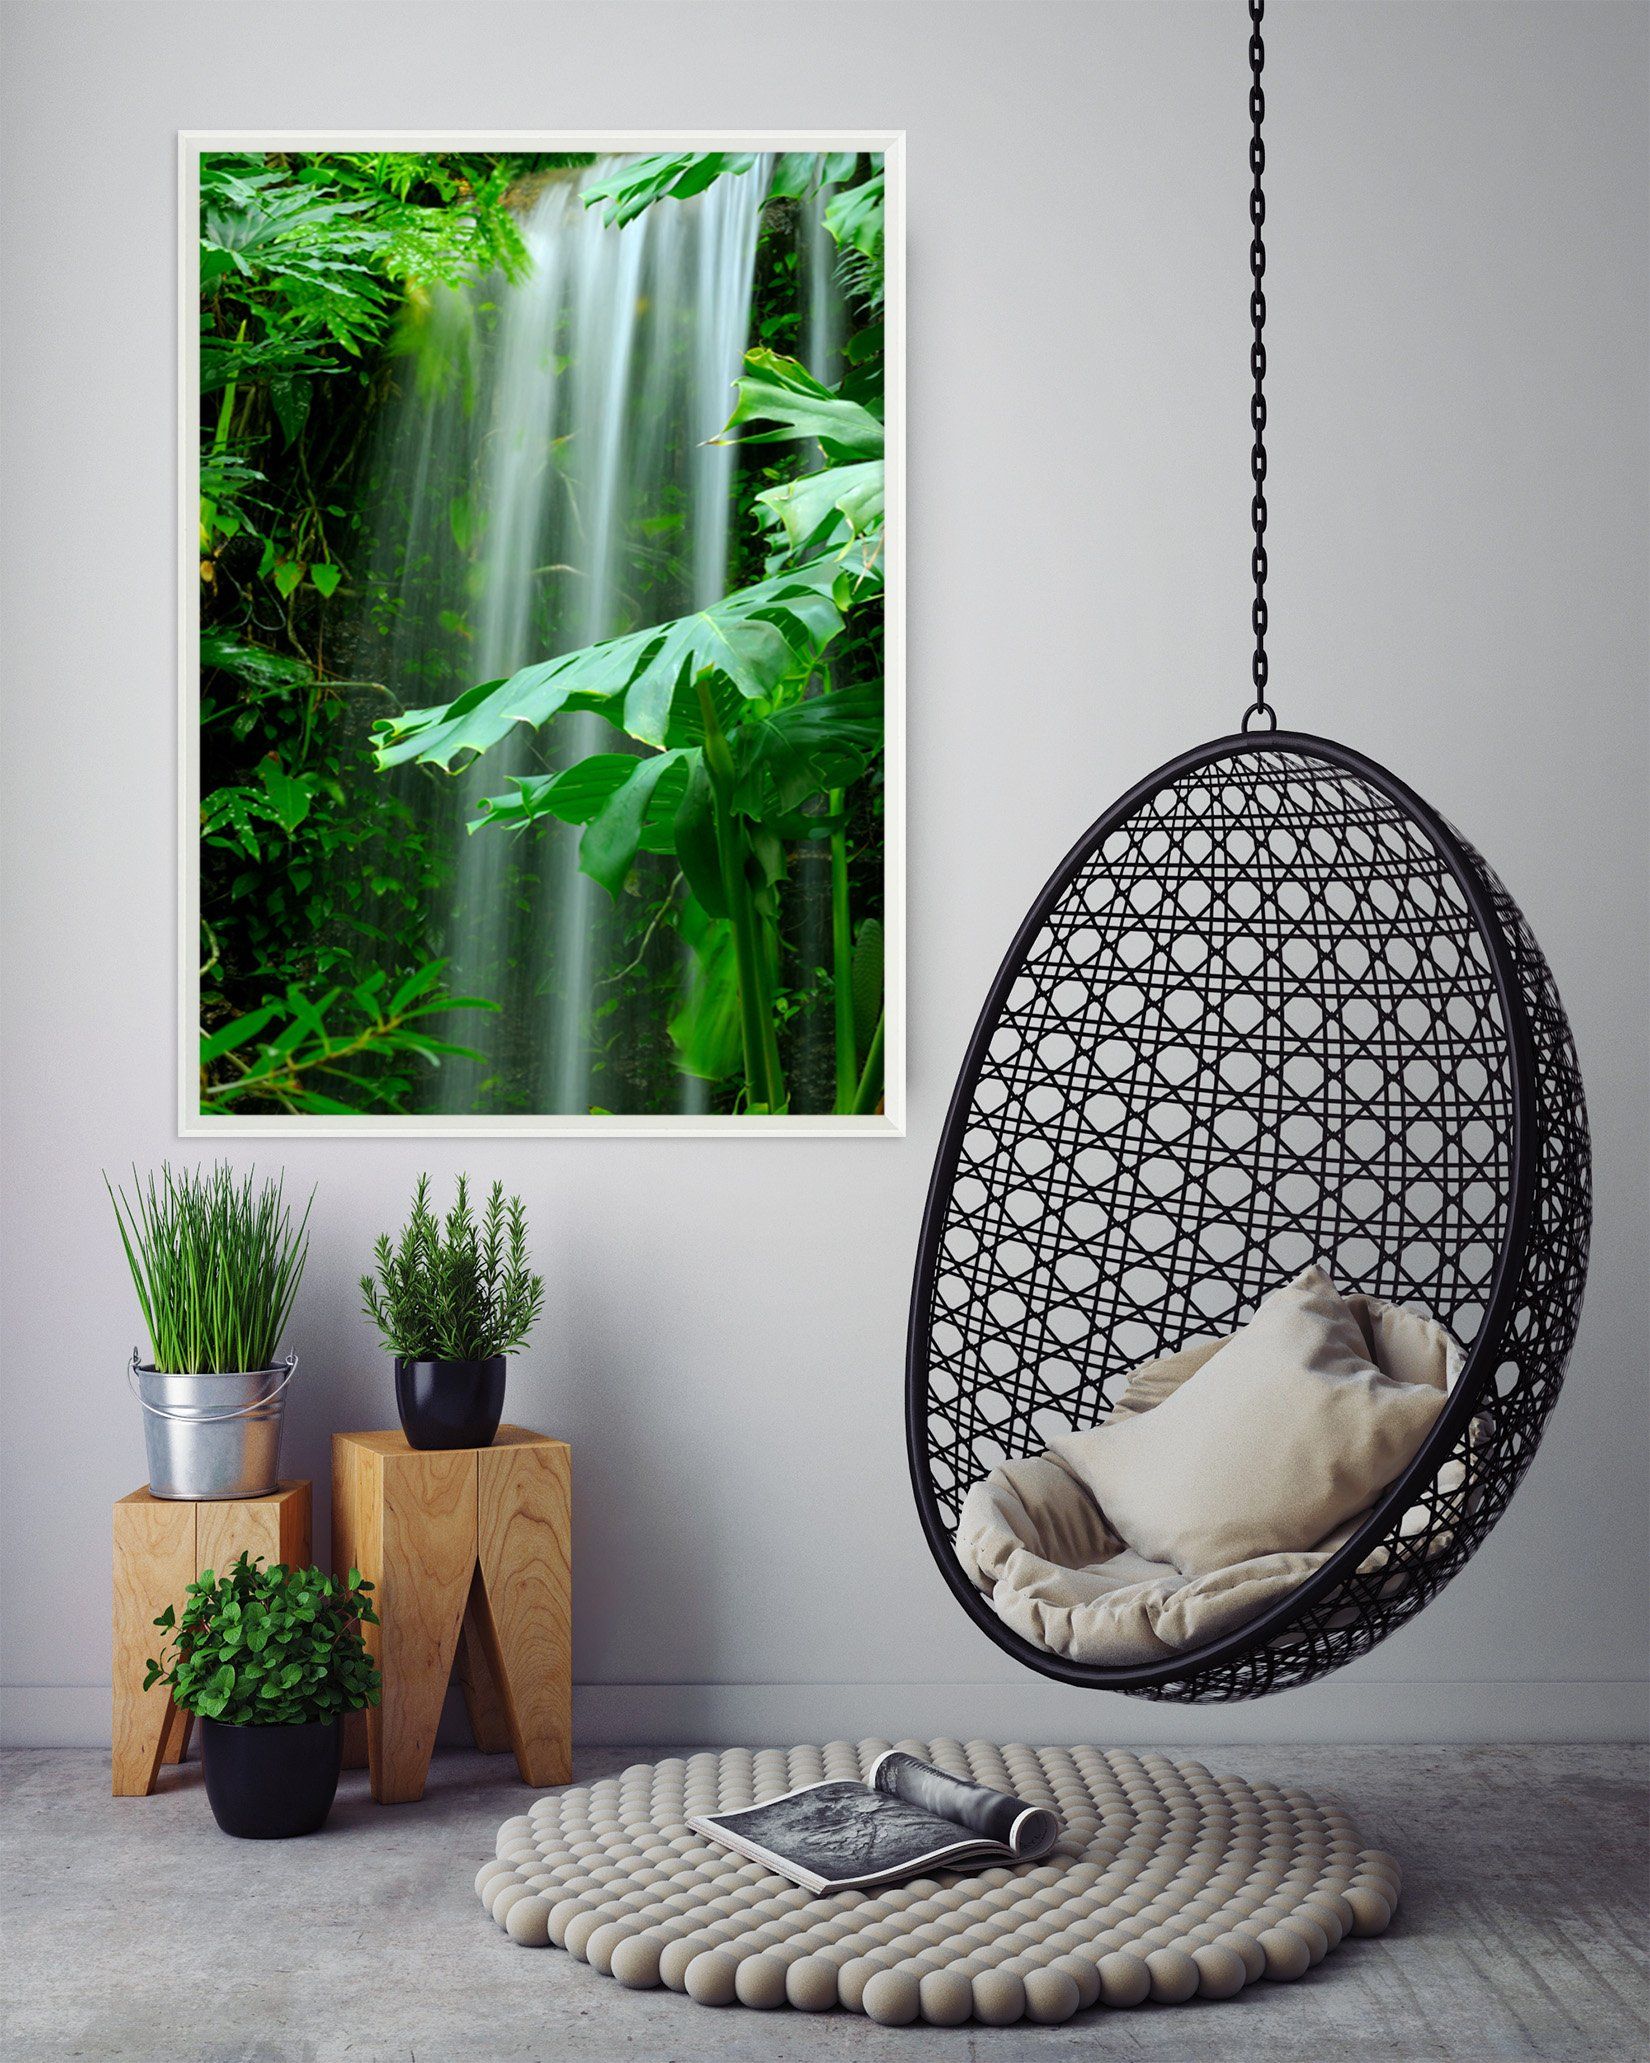 3D Small Waterfall 058 Fake Framed Print Painting Wallpaper AJ Creativity Home 